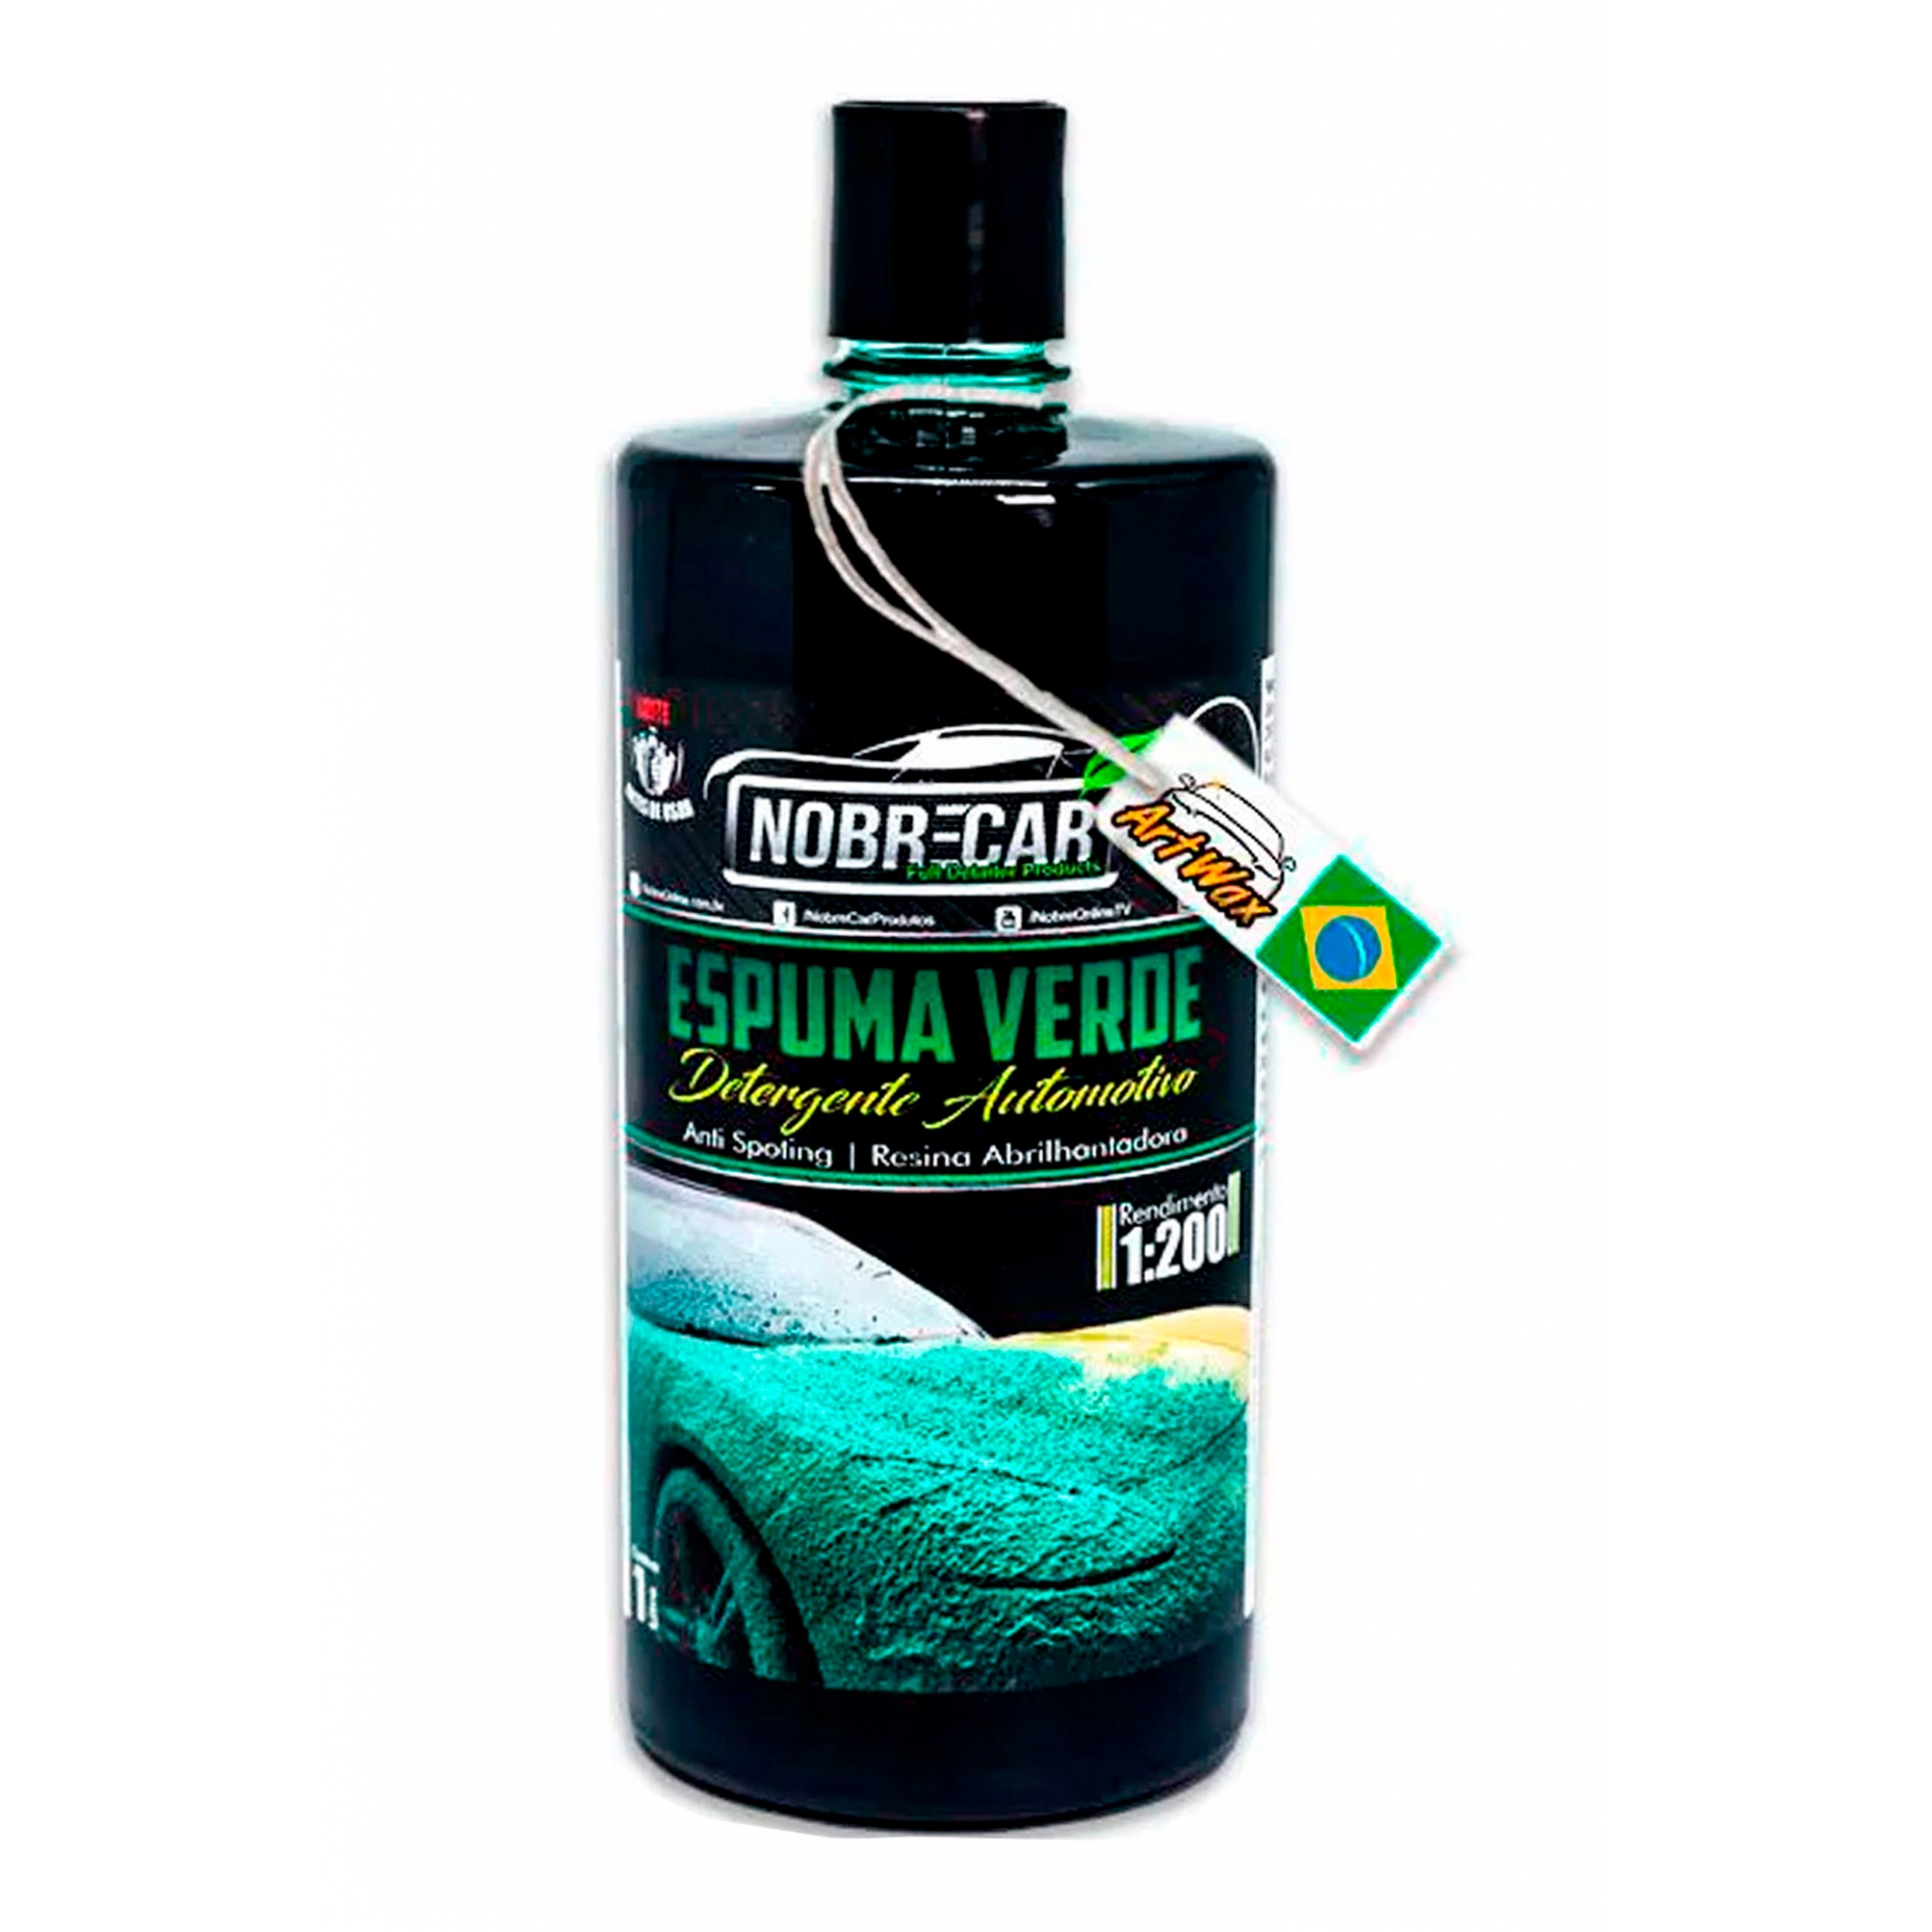 Espuma Verde Detergente Automotivo Nobre Car 1 Litro